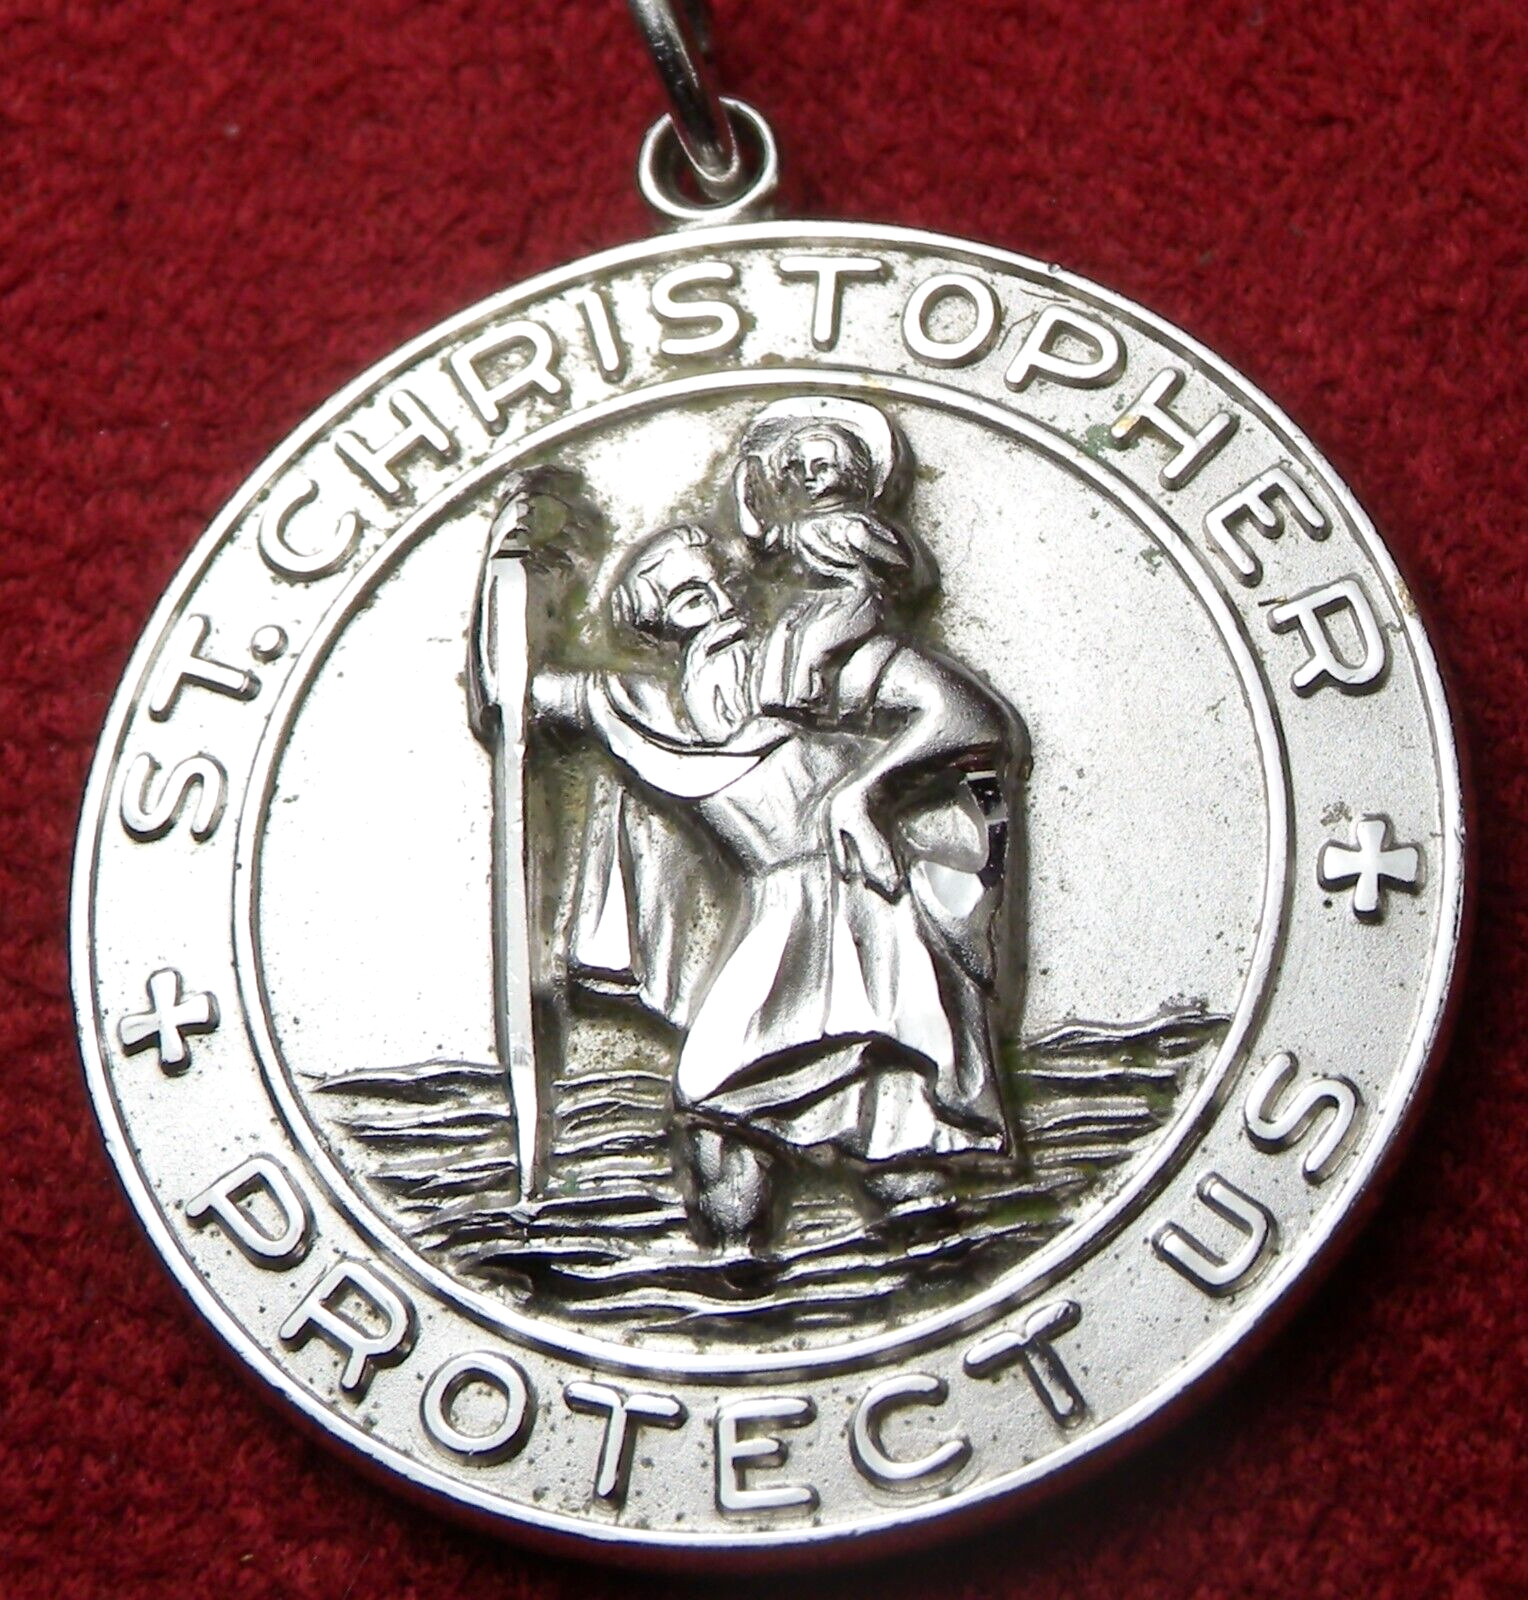 Carmelite Nuns Rare Vintage St. Christopher 12 GRAMS Sterling Silver Ingot Medal